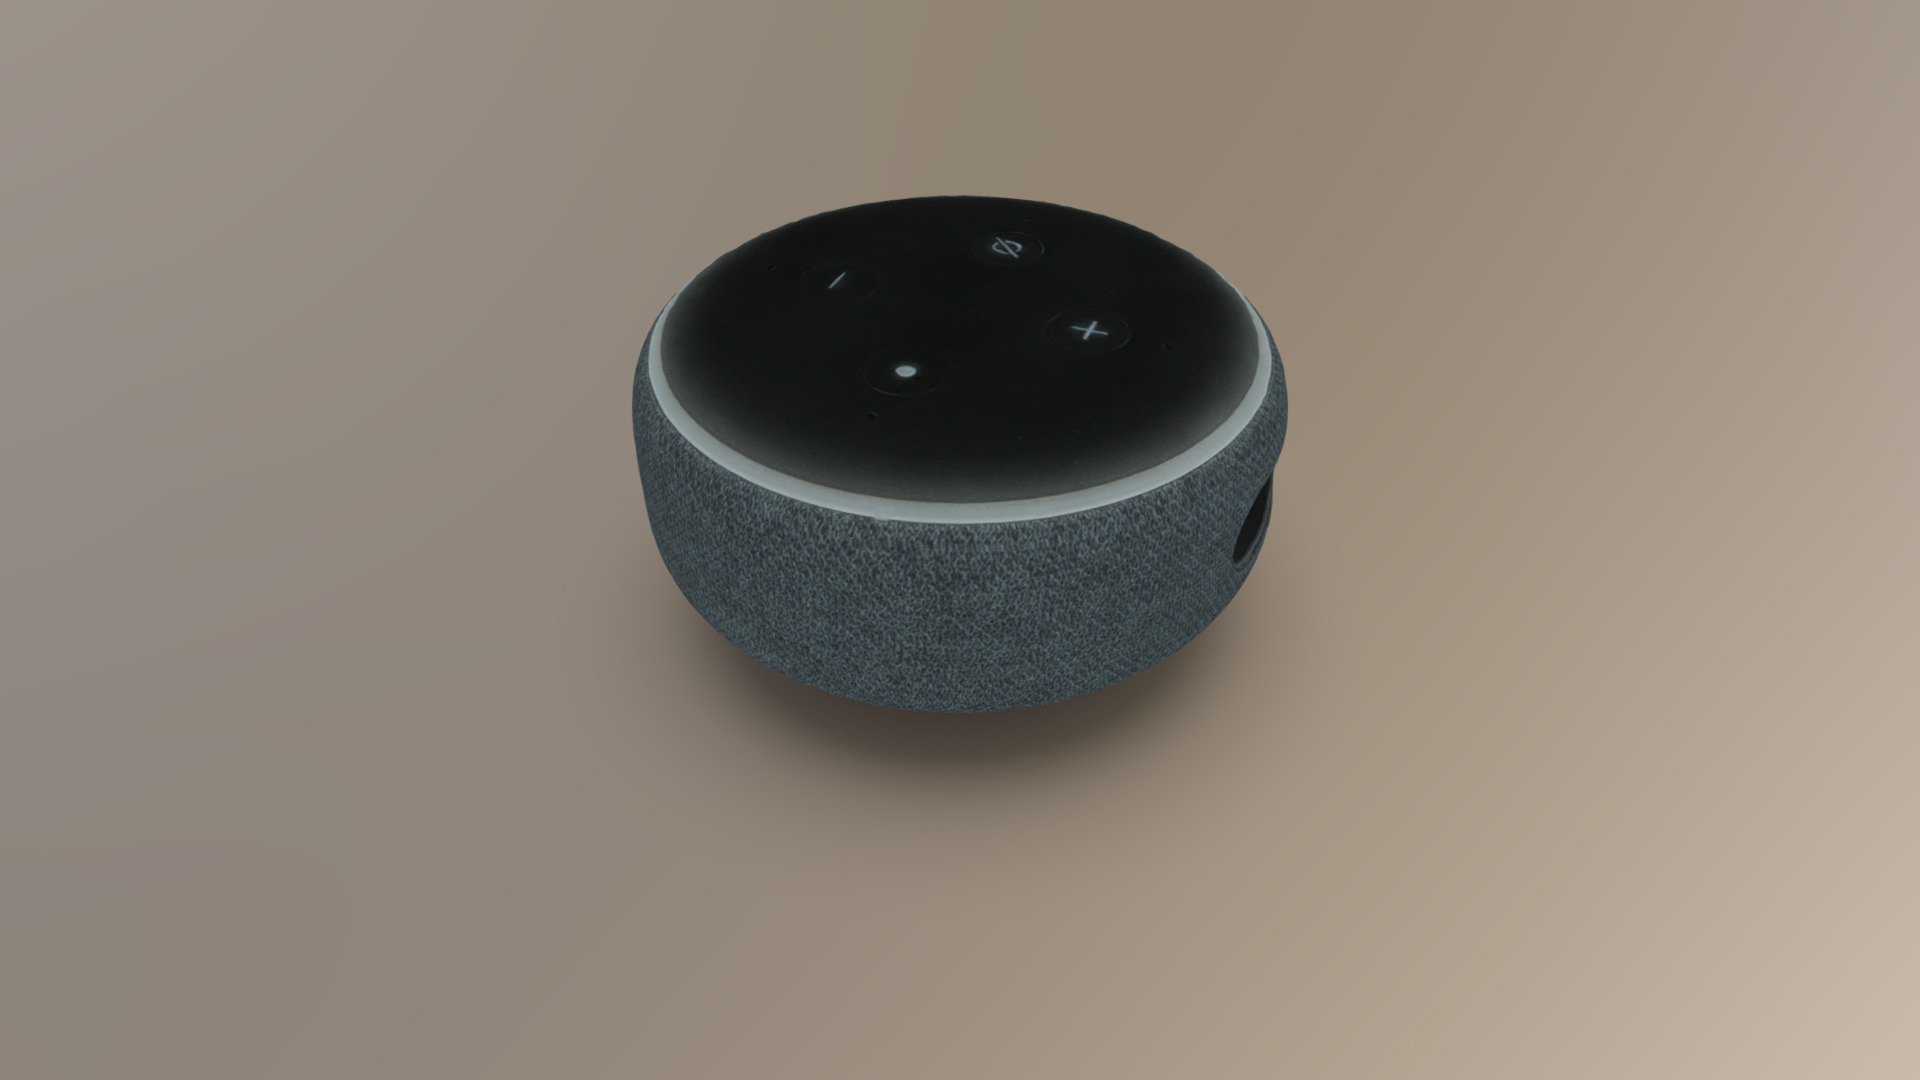 3D model Amazon Alexa Echo Dot (3rd Gen) – Charcoal - This is a 3D model of the Amazon Alexa Echo Dot (3rd Gen) - Charcoal. The 3D model is about a black computer mouse.